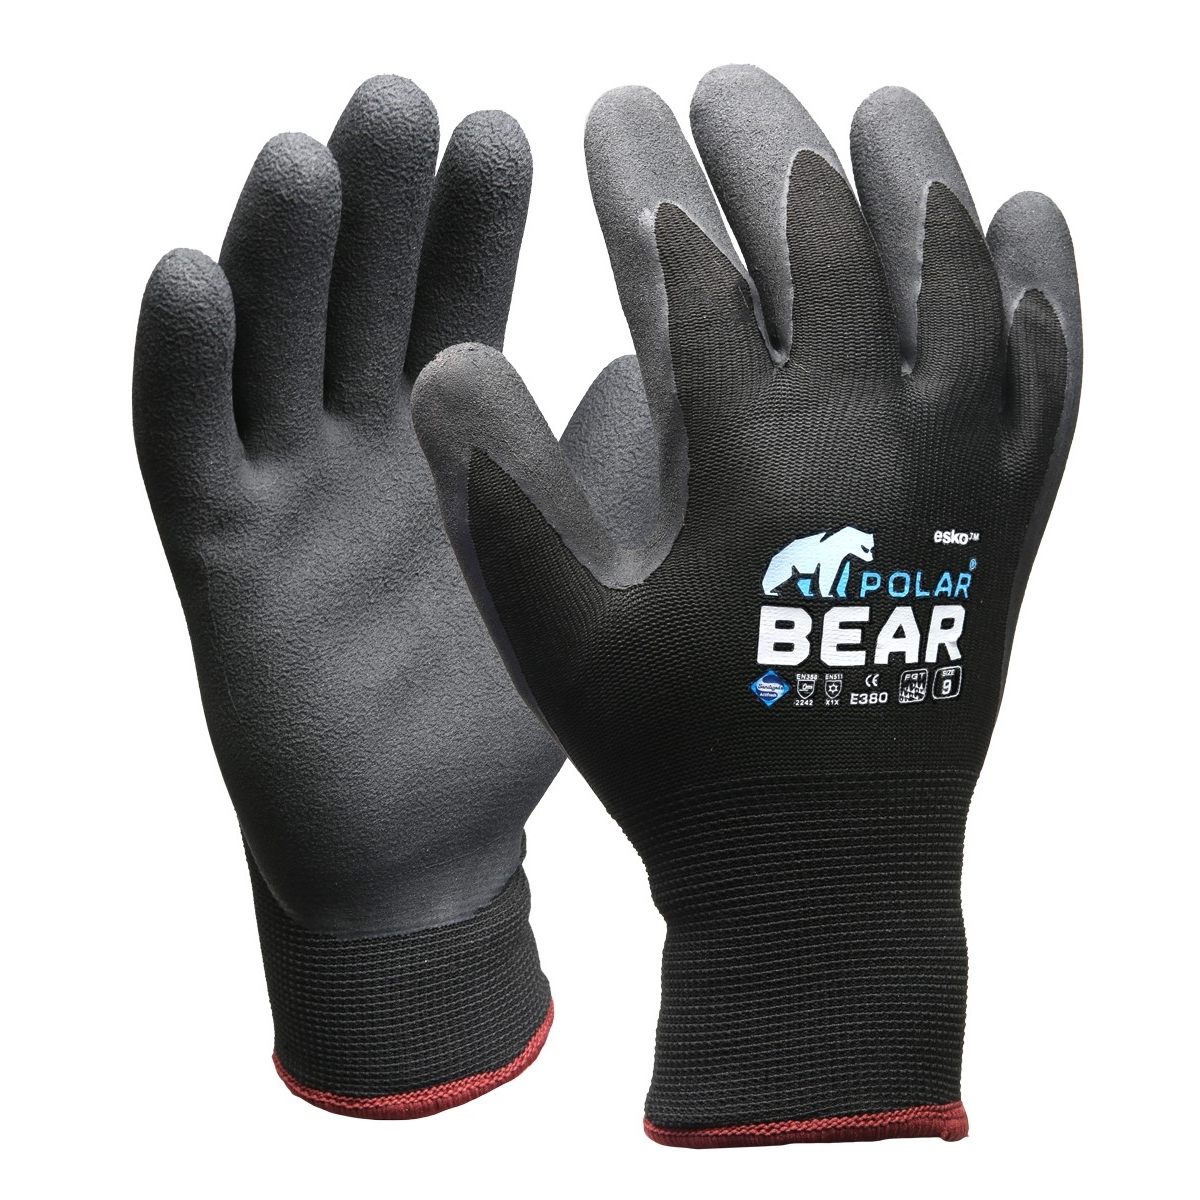 Esko Polar Bear Dual-Lined Thermal Winter Gloves